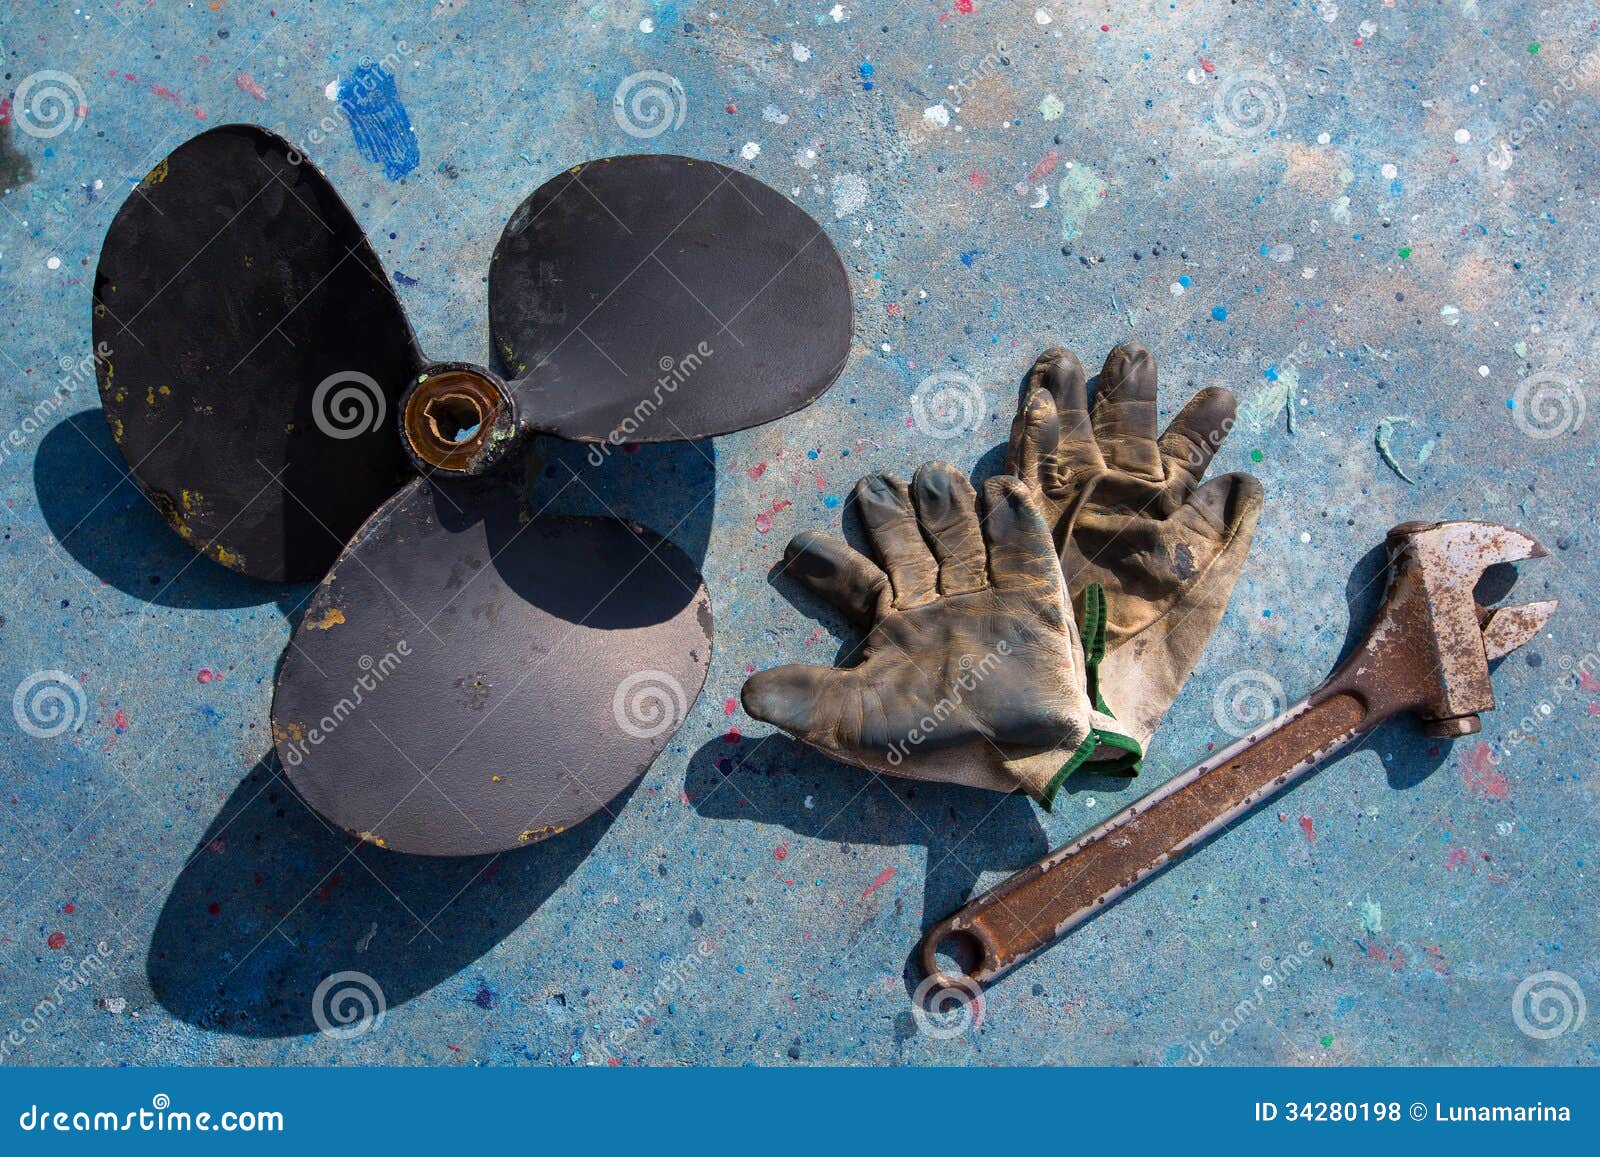 boat propeller improvement repair tools and gloves